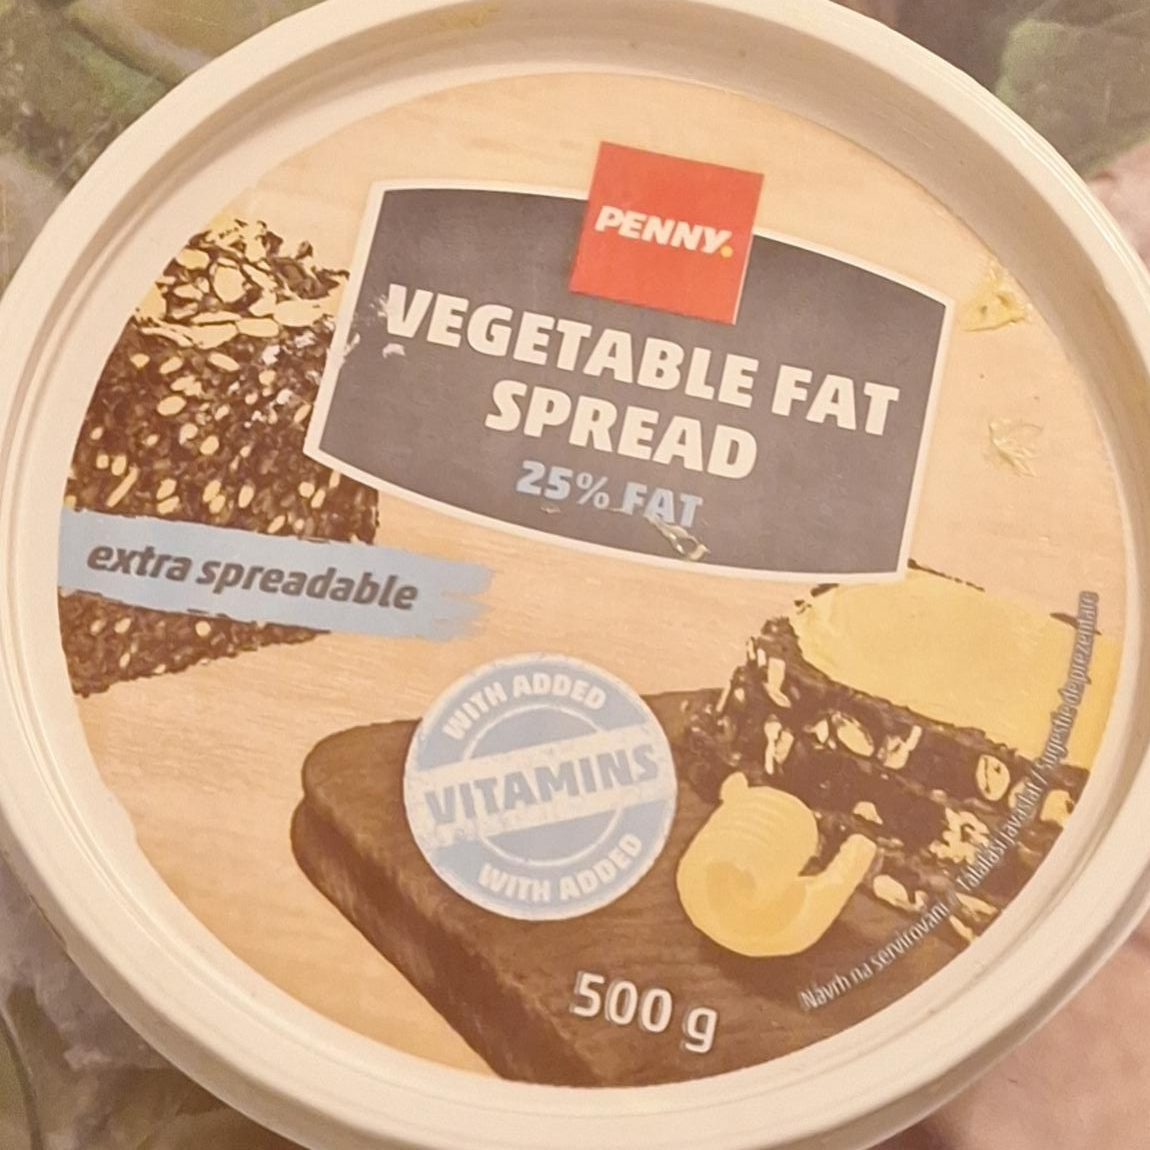 Képek - Vegetable fat spread Penny